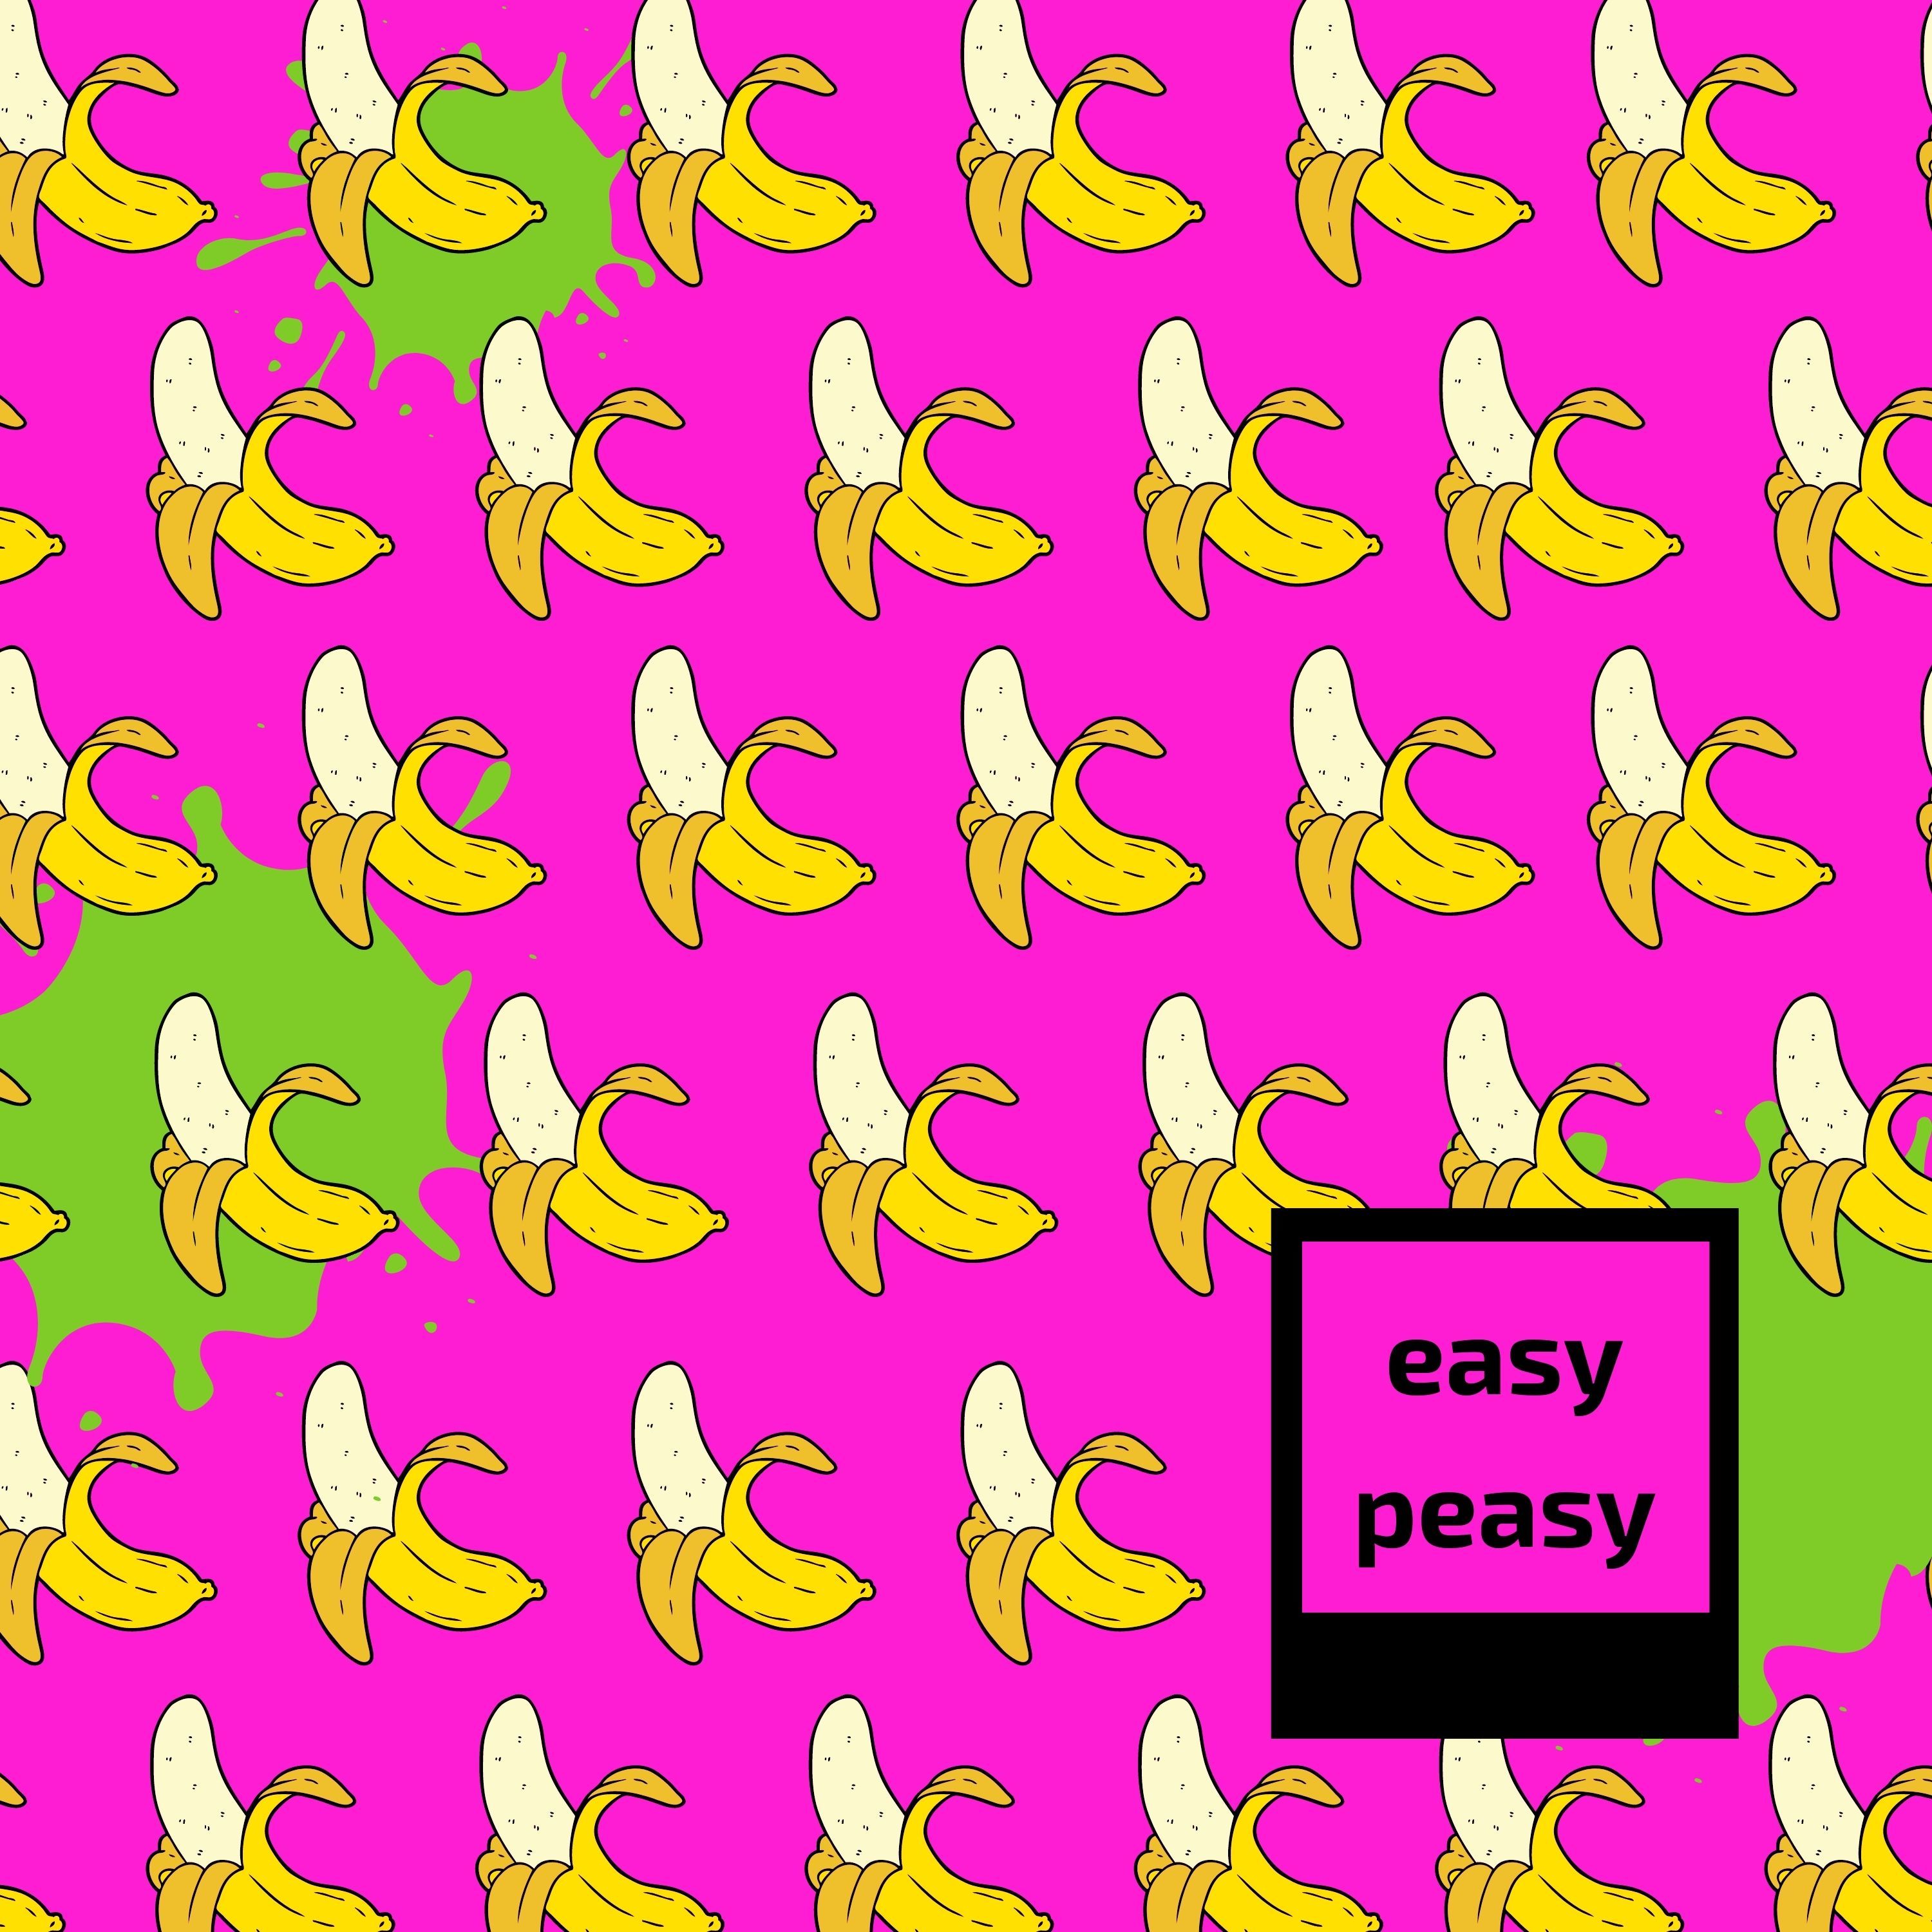 Easy Peasy. Mp3 easy Peasy. Easy peazy